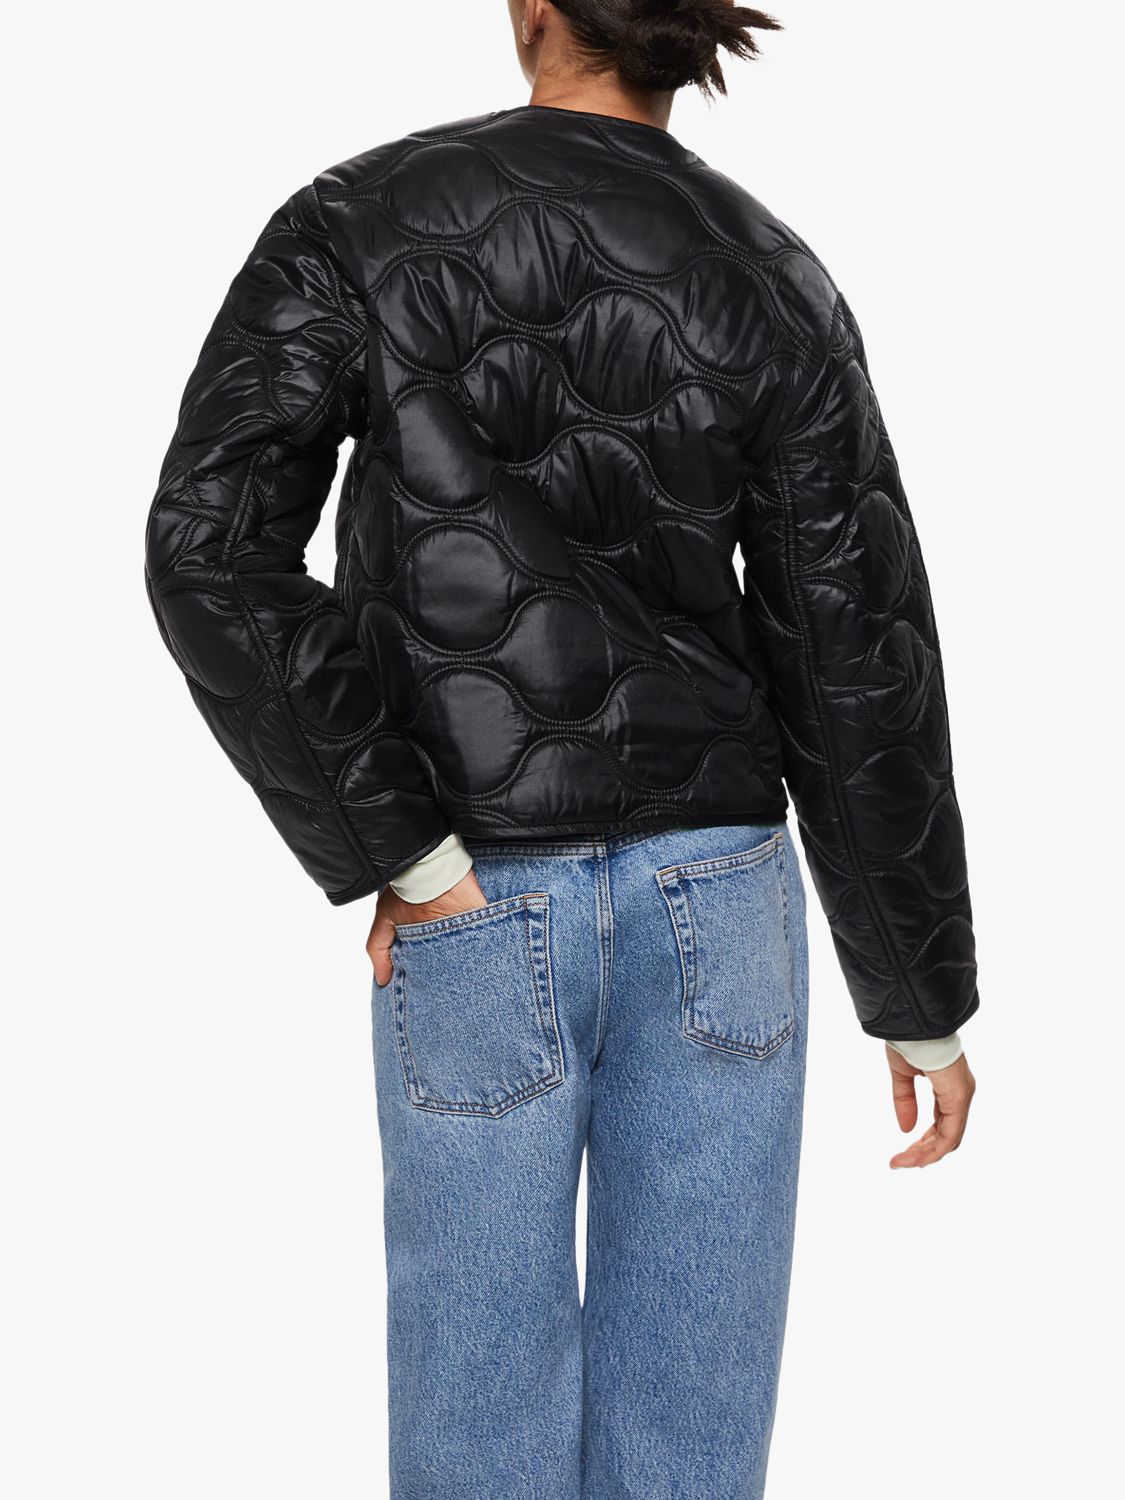 vuitton monogram flower leather down jacket